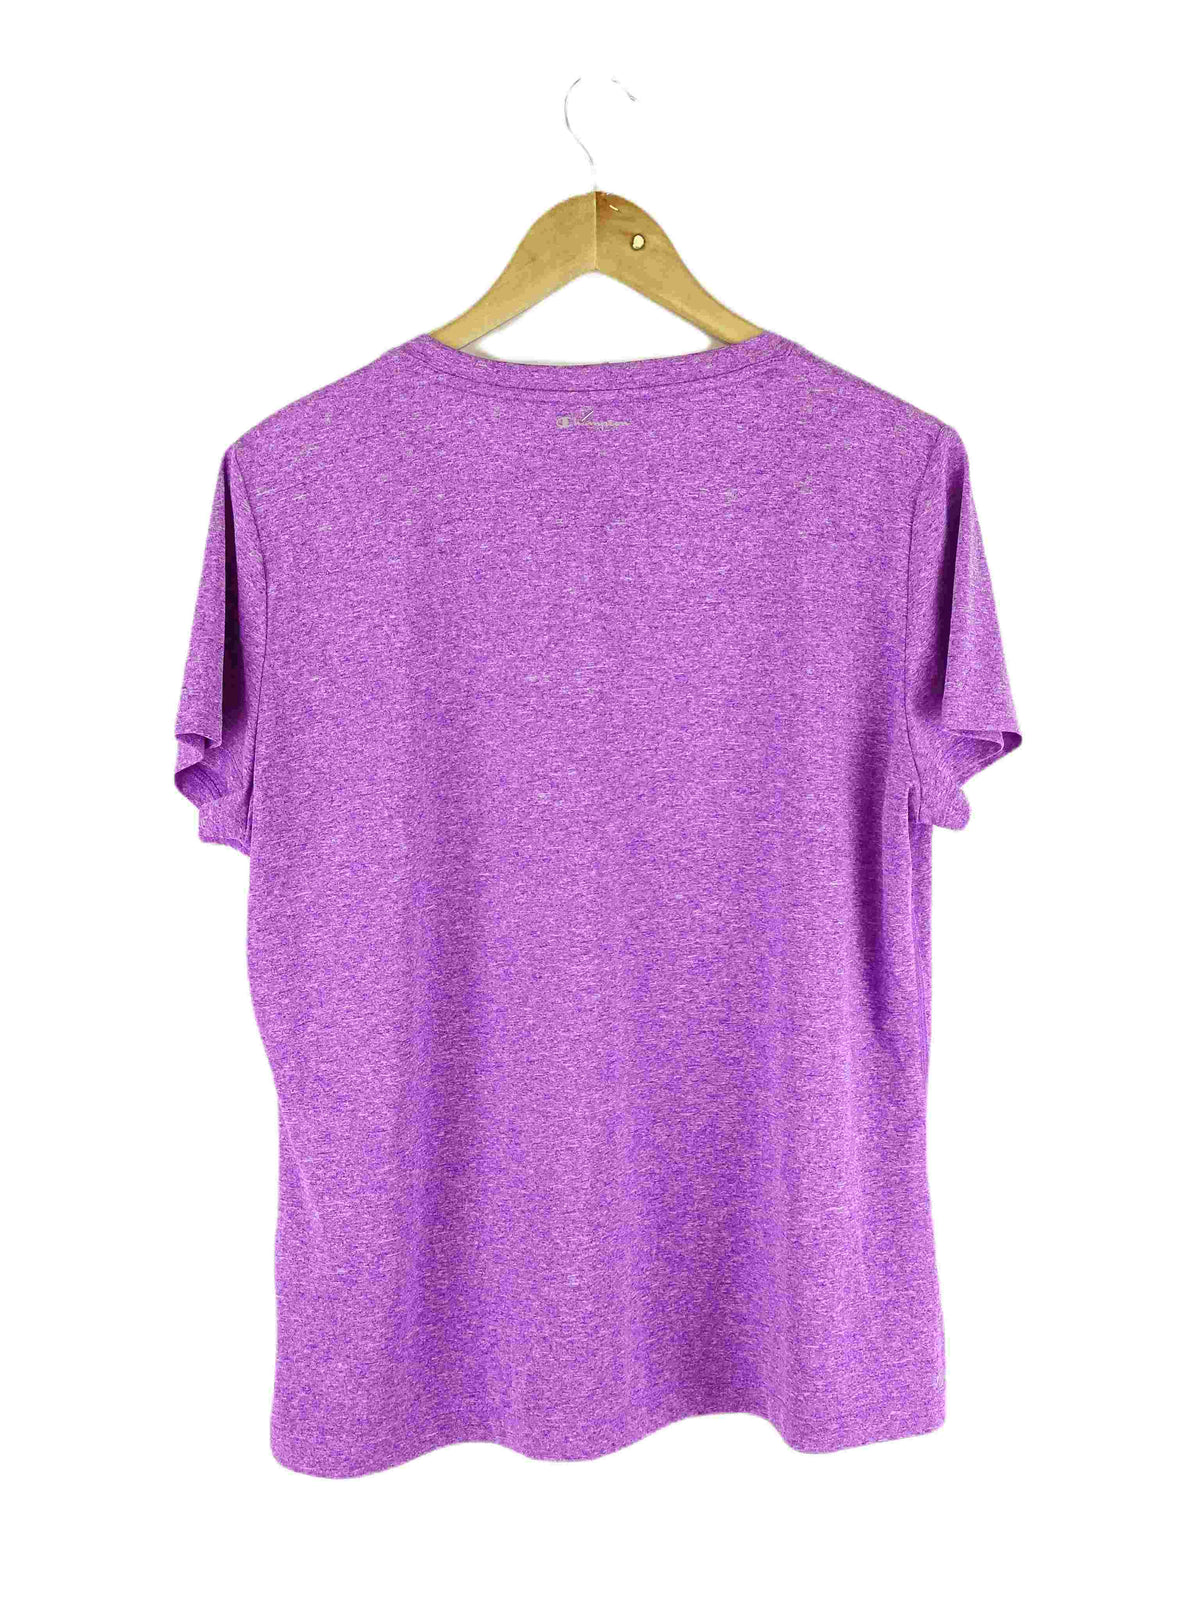 Champion Purple T-shirt XL